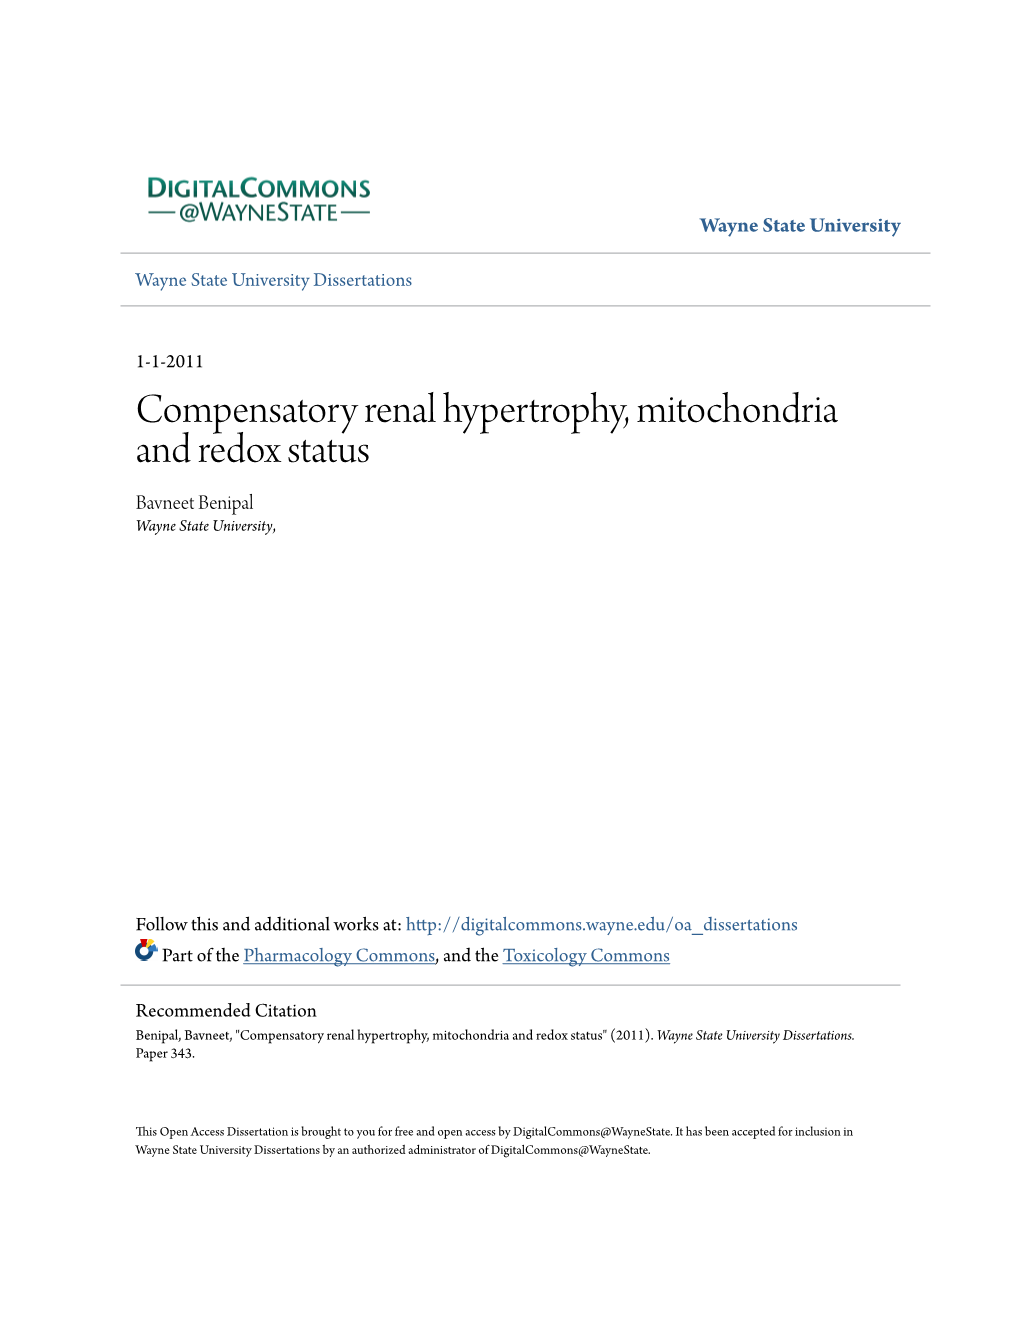 Compensatory Renal Hypertrophy, Mitochondria and Redox Status Bavneet Benipal Wayne State University